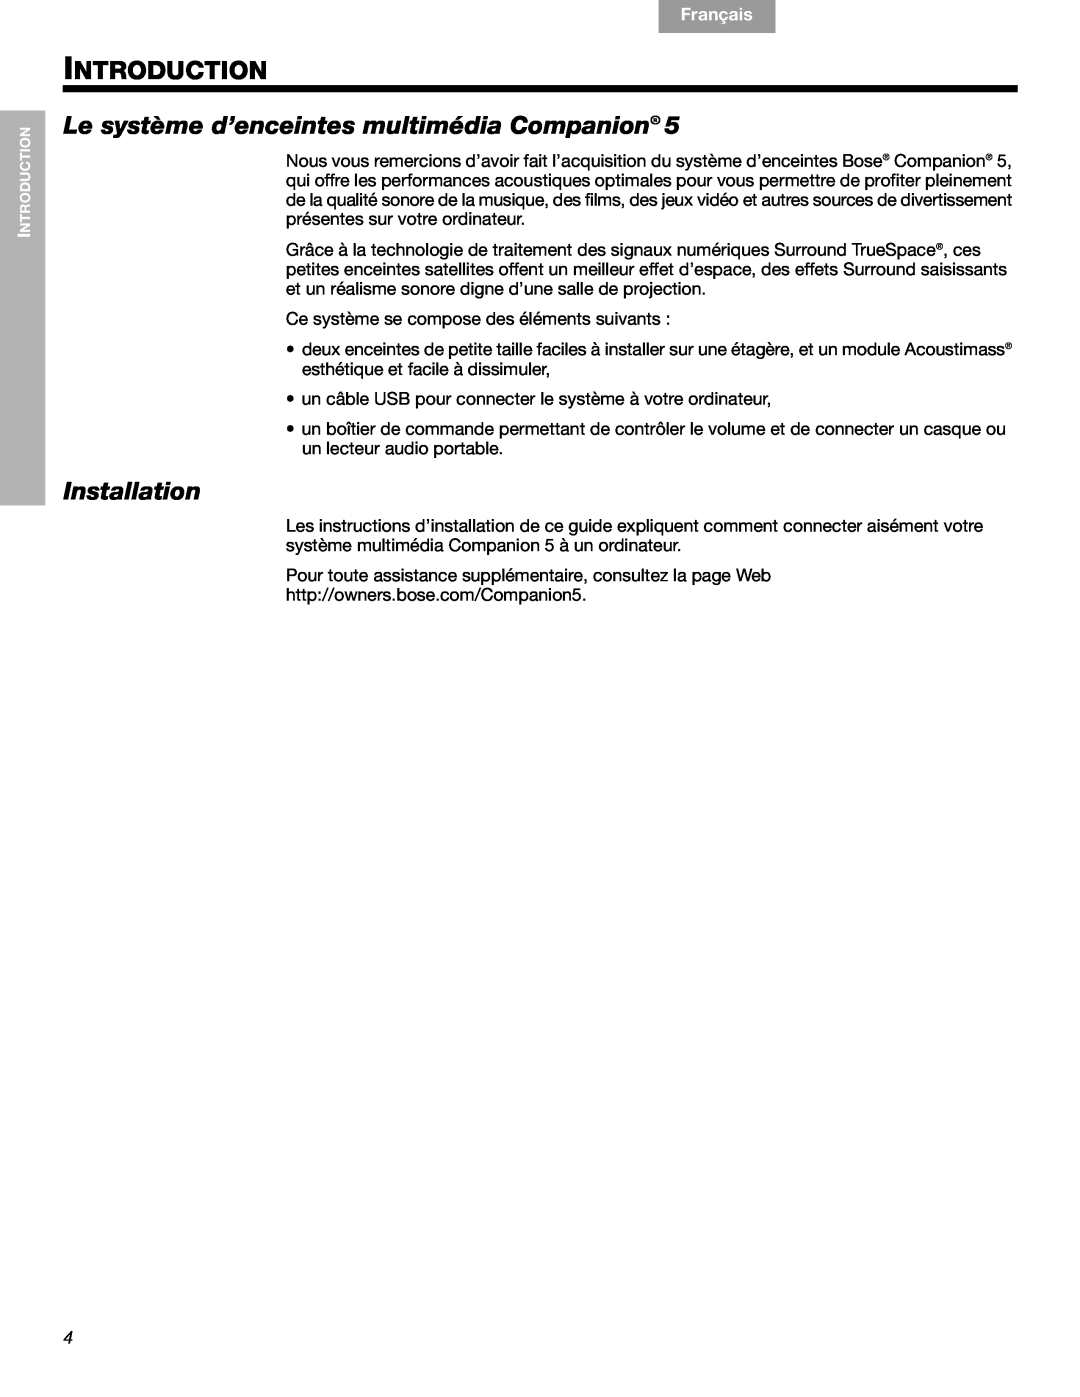 Bose 40326 manual Le système d’enceintes multimédia Companion, Installation, Introduction, Français, Español, English 